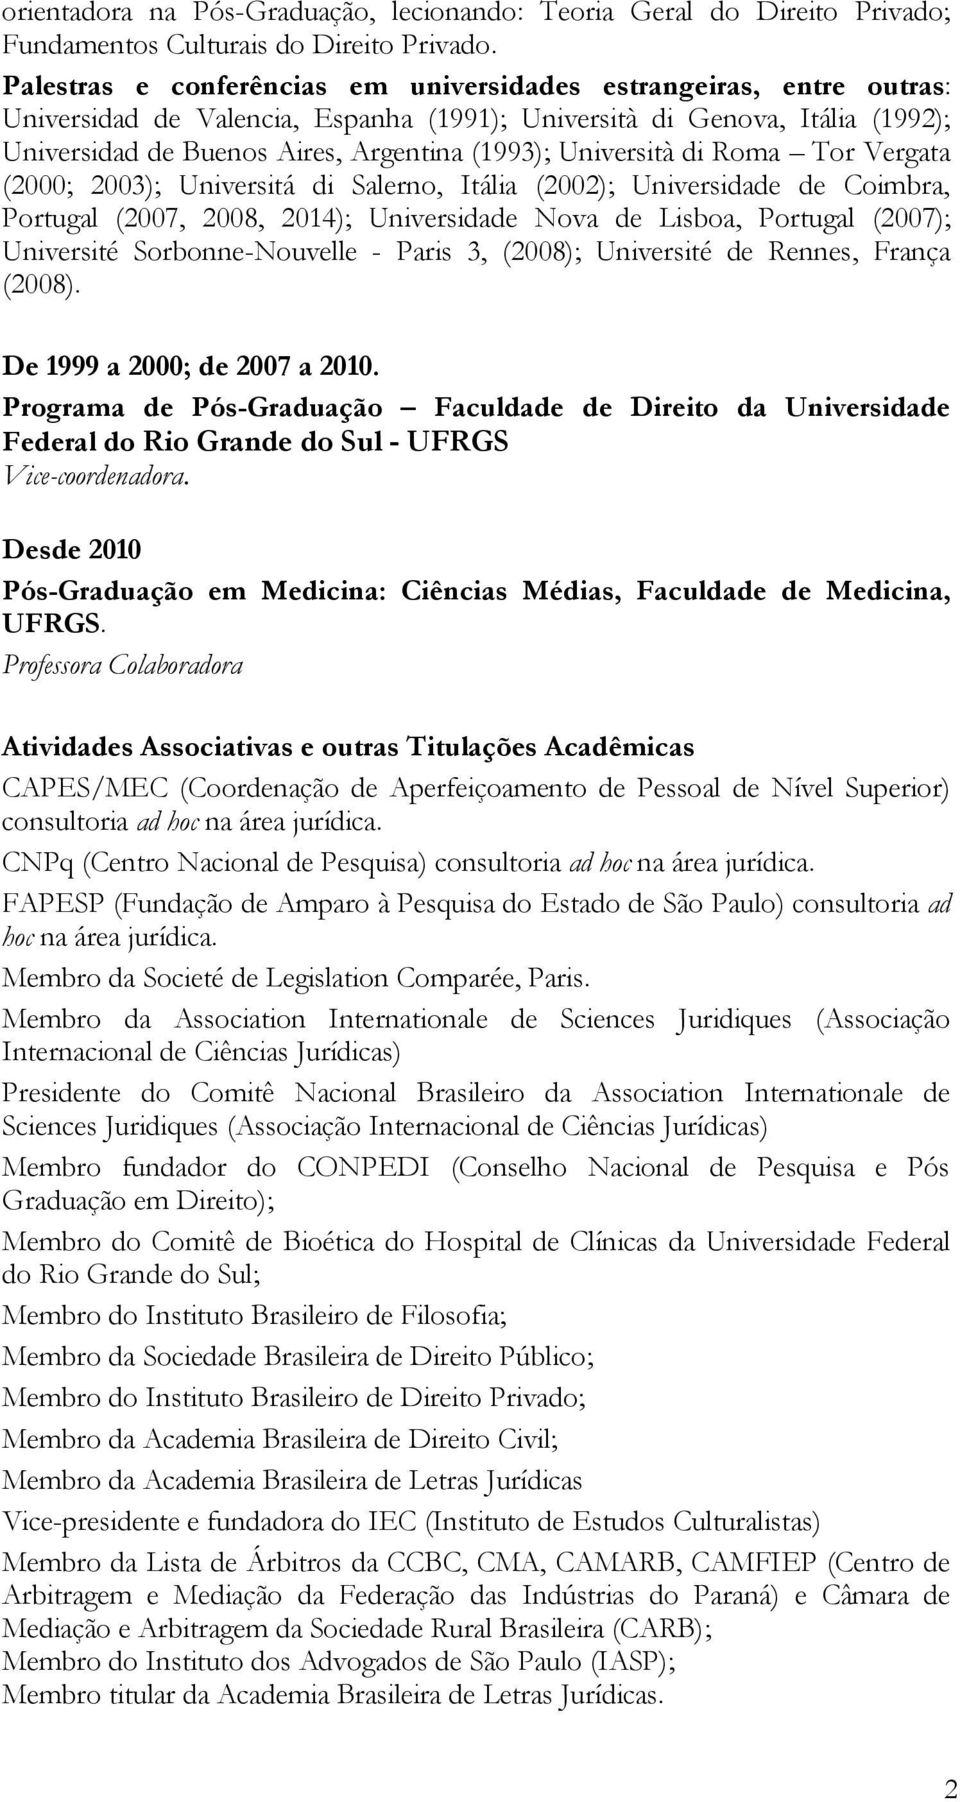 Università di Roma Tor Vergata (2000; 2003); Universitá di Salerno, Itália (2002); Universidade de Coimbra, Portugal (2007, 2008, 2014); Universidade Nova de Lisboa, Portugal (2007); Université